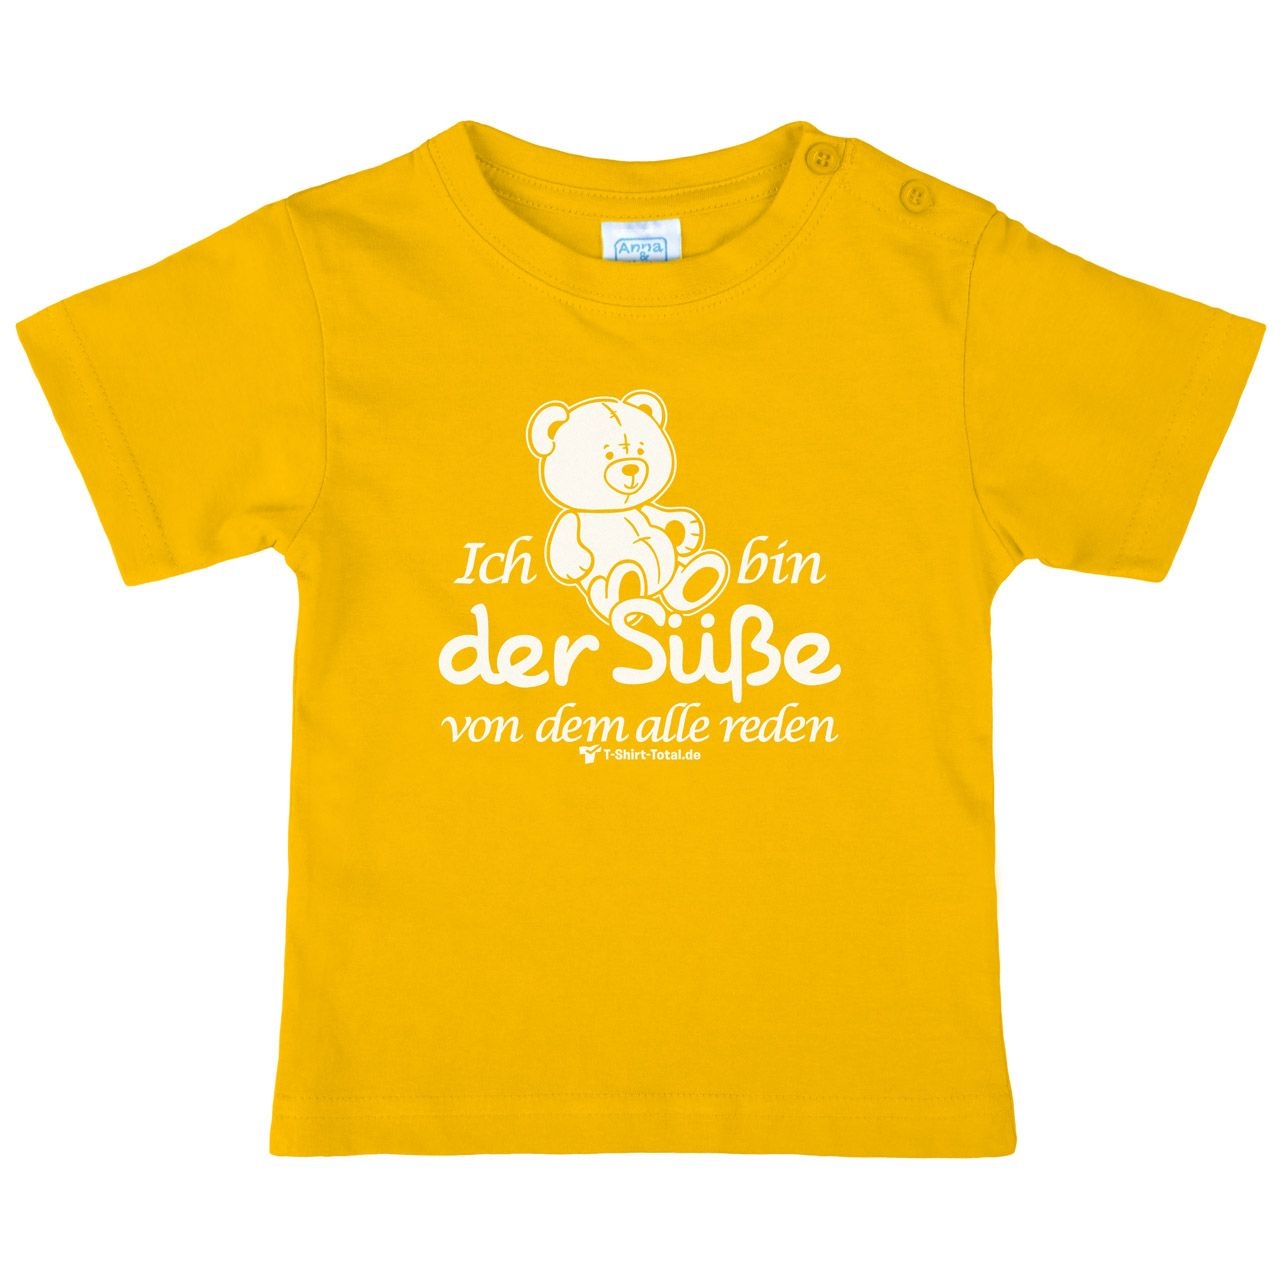 Der Süße Kinder T-Shirt gelb 56 / 62